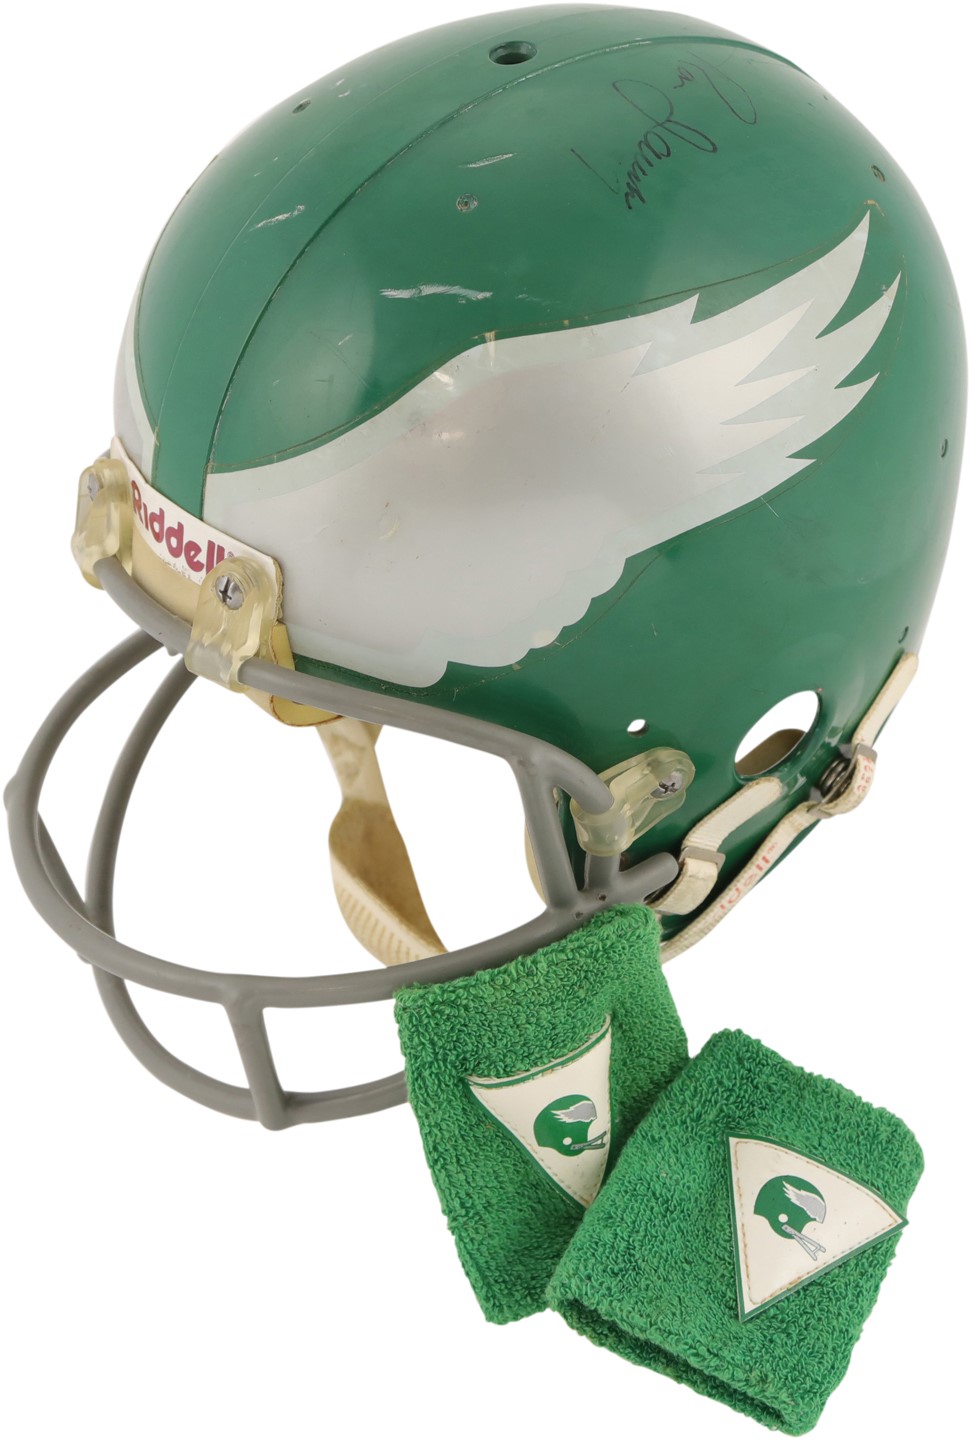 The Philadelphia Eagles Collection - Late 1970s Ron Jaworski Philadelphia Eagles Game Worn Helmet and Wristbands